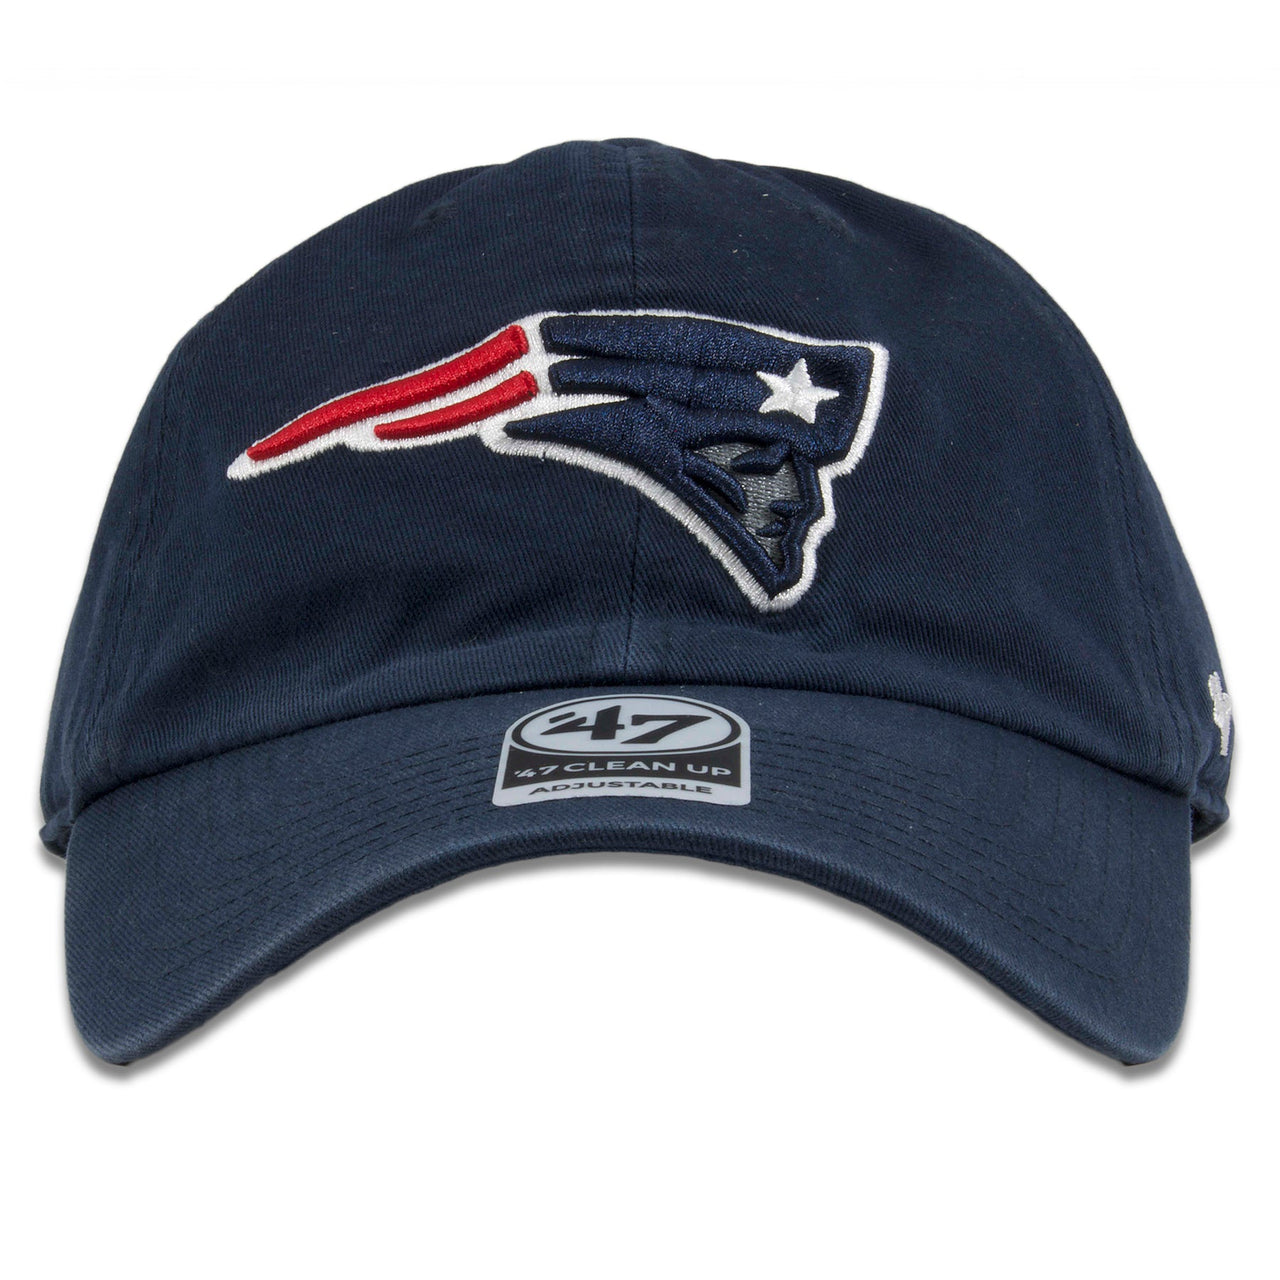 New England Patriots '47 Brand Navy Blue Adjustable Dad Hat